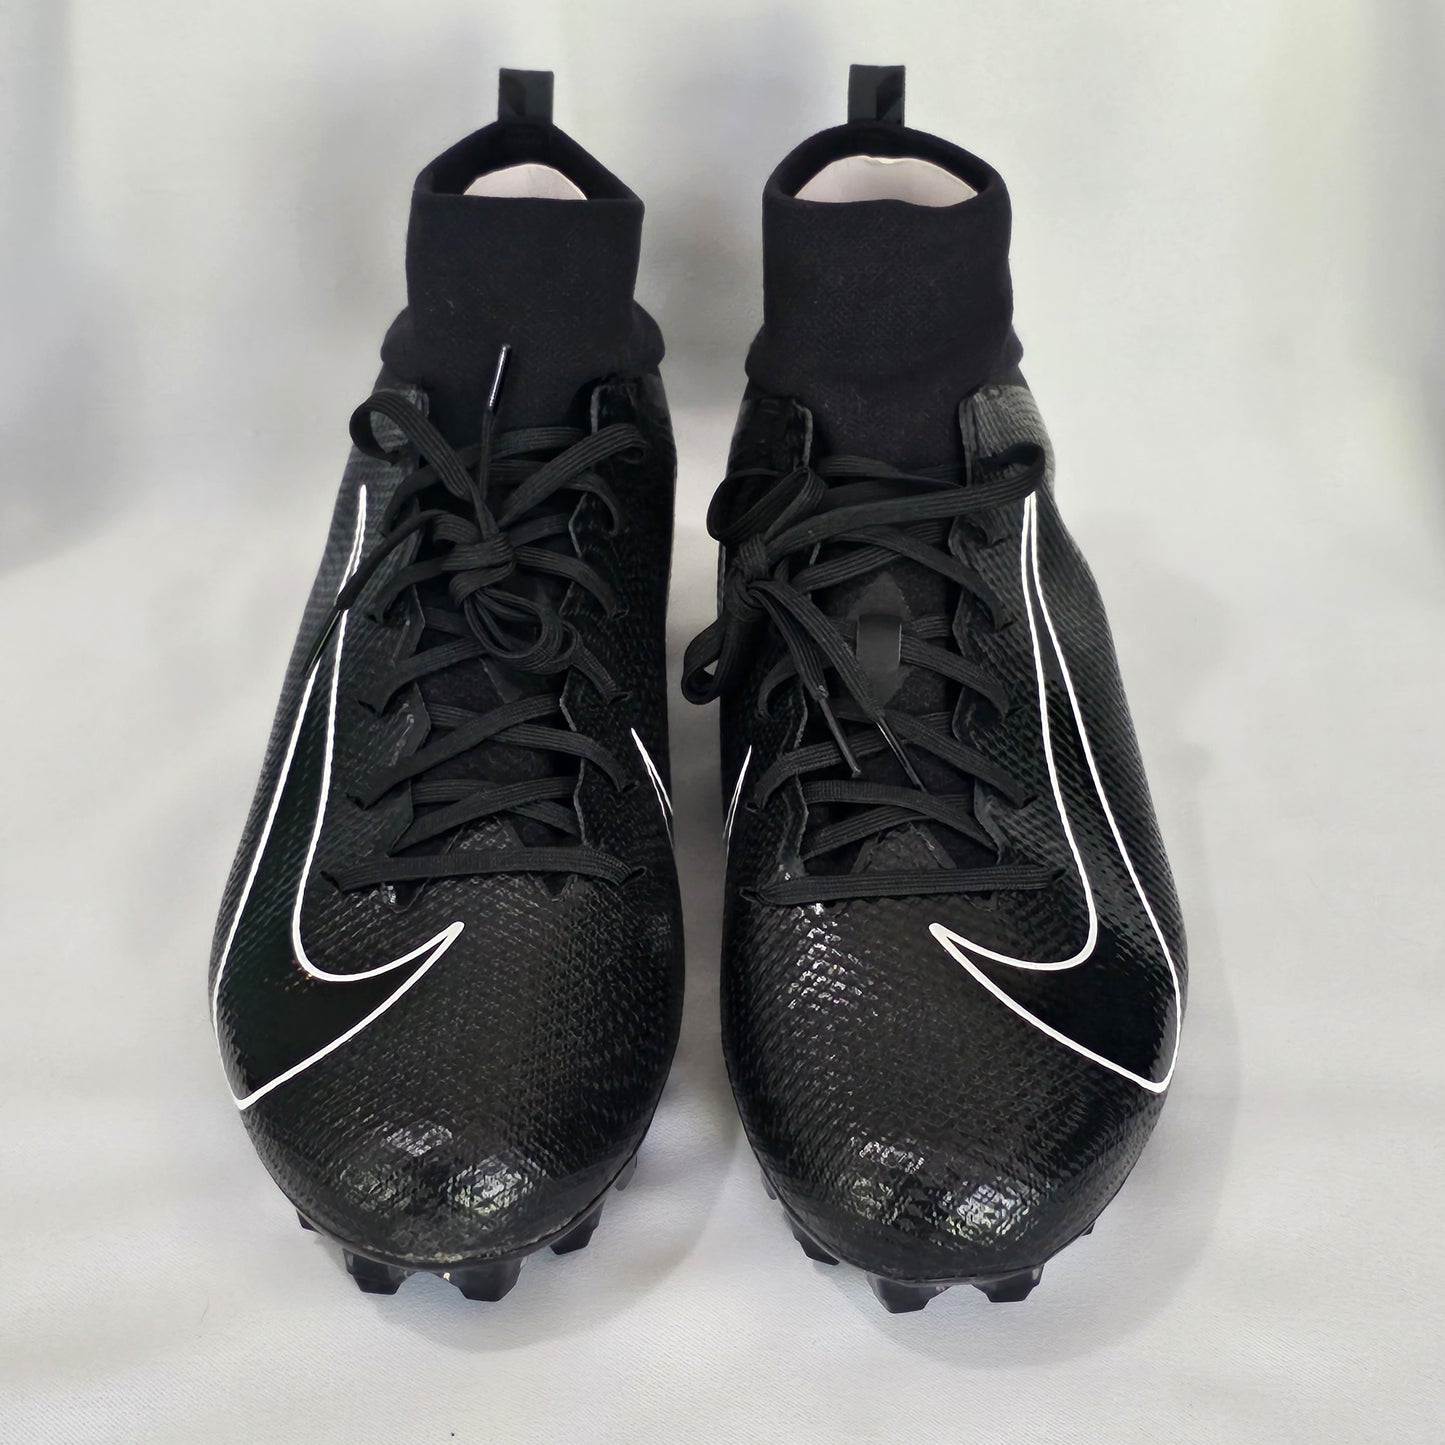 Nike Vapor Untouchable Pro 3 Mid Black Football Cleats in Box